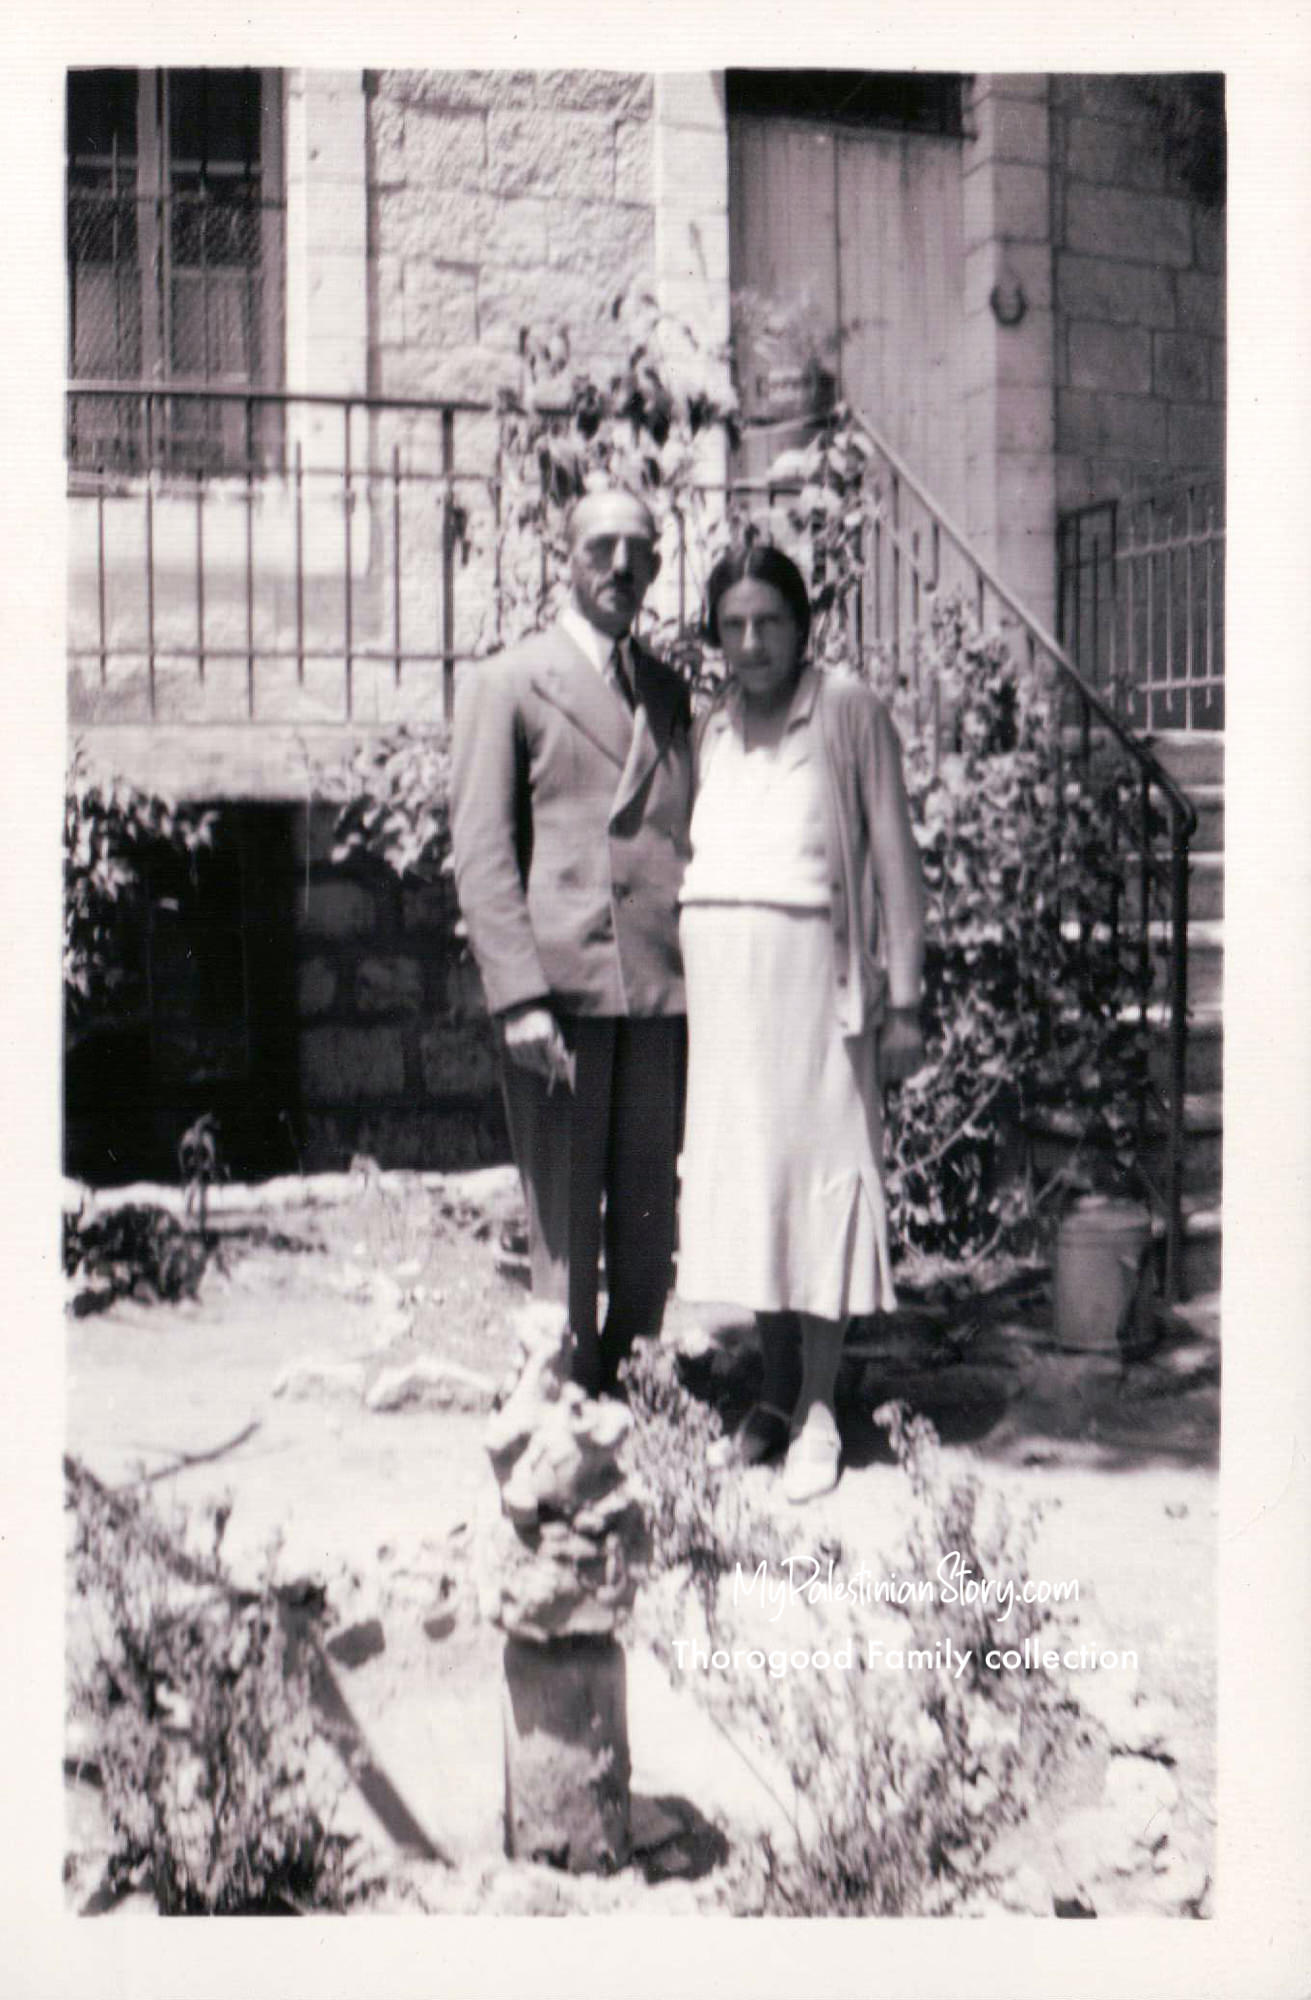 Bill and Marika Thorogood expecting Gaitanopoulos house, Jerusalem - 1933 (Thorogood Family collection)